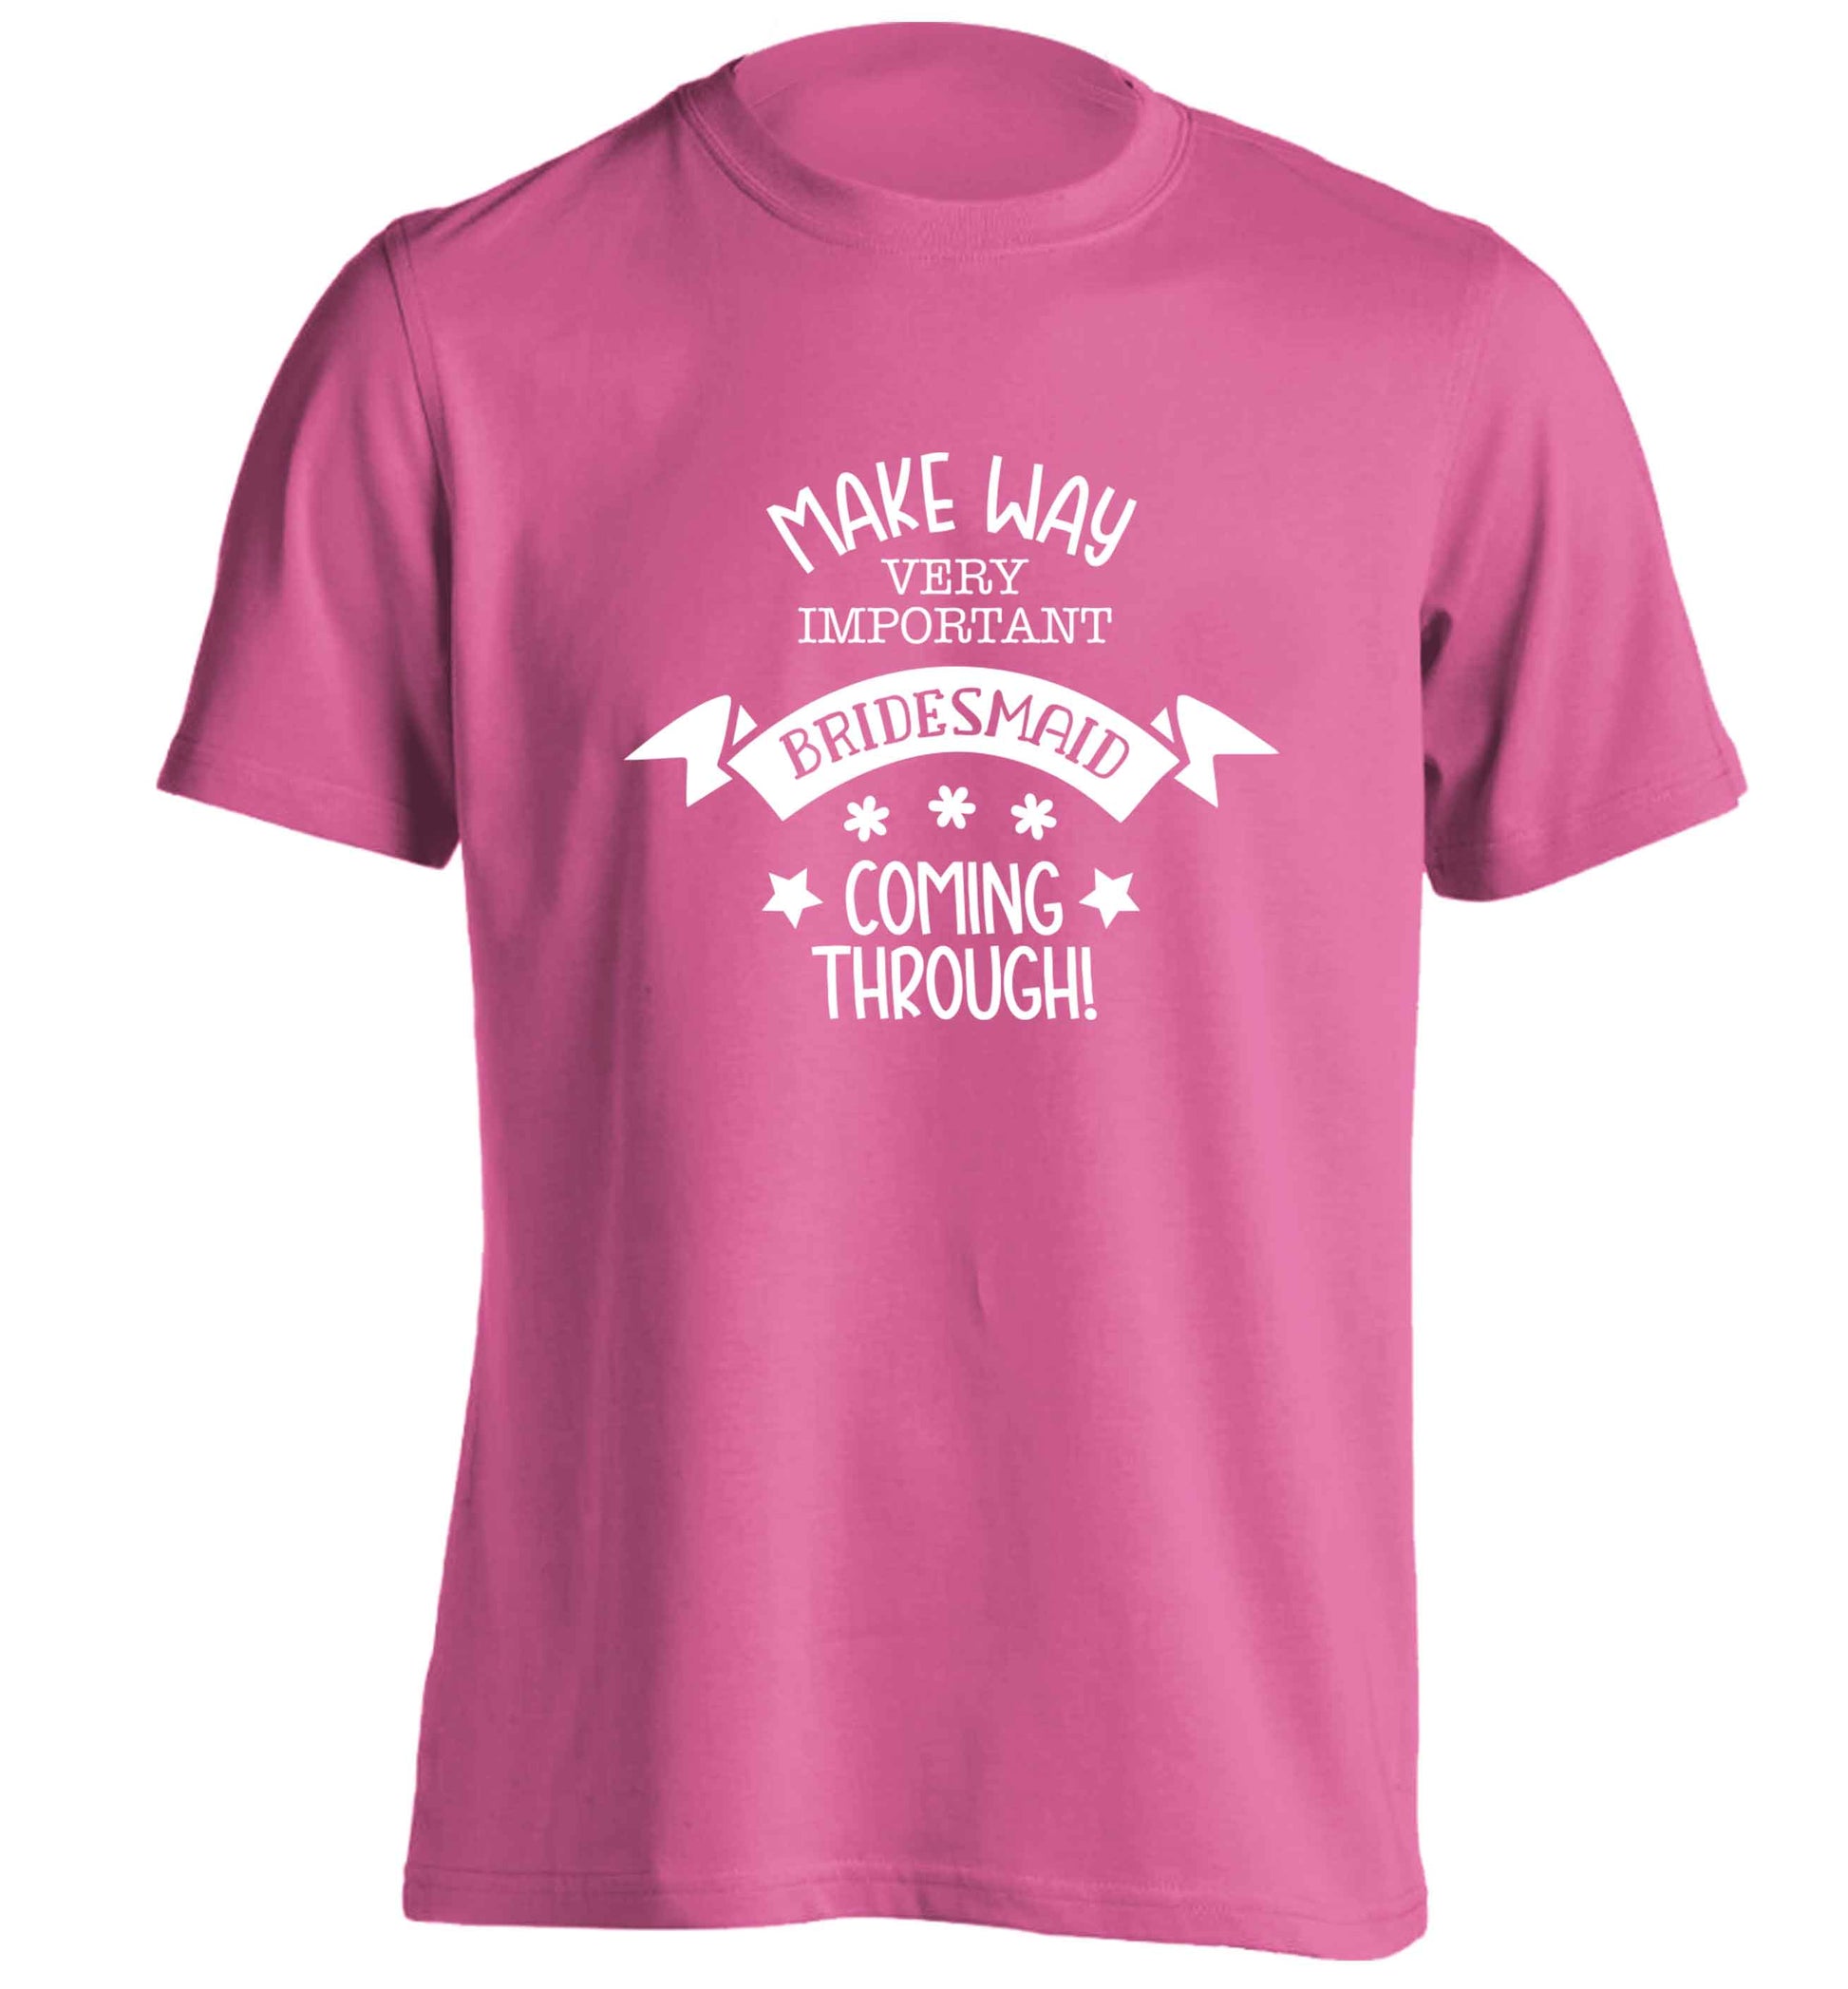 Make way very important bridesmaid coming through adults unisex pink Tshirt 2XL